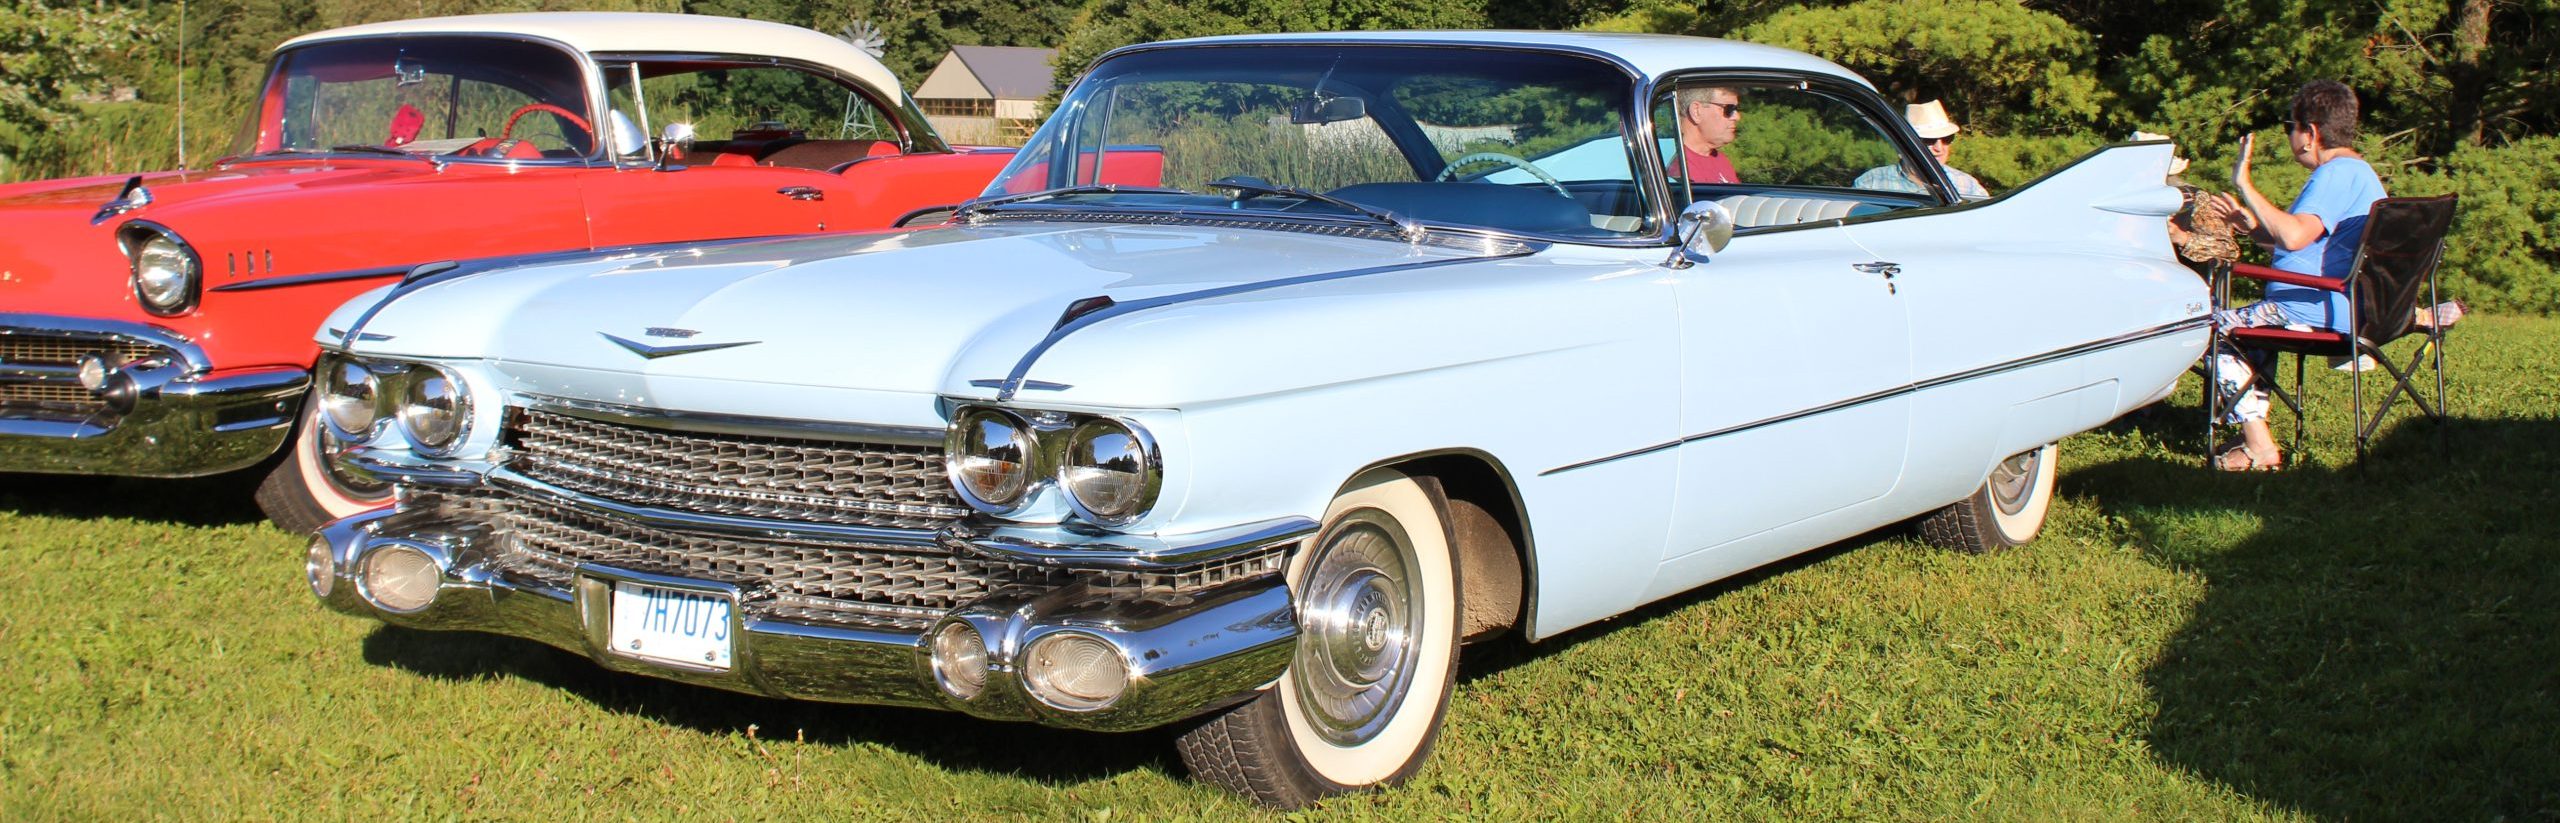 1959 Cadillac Coupe de Ville – Sam Cuttell